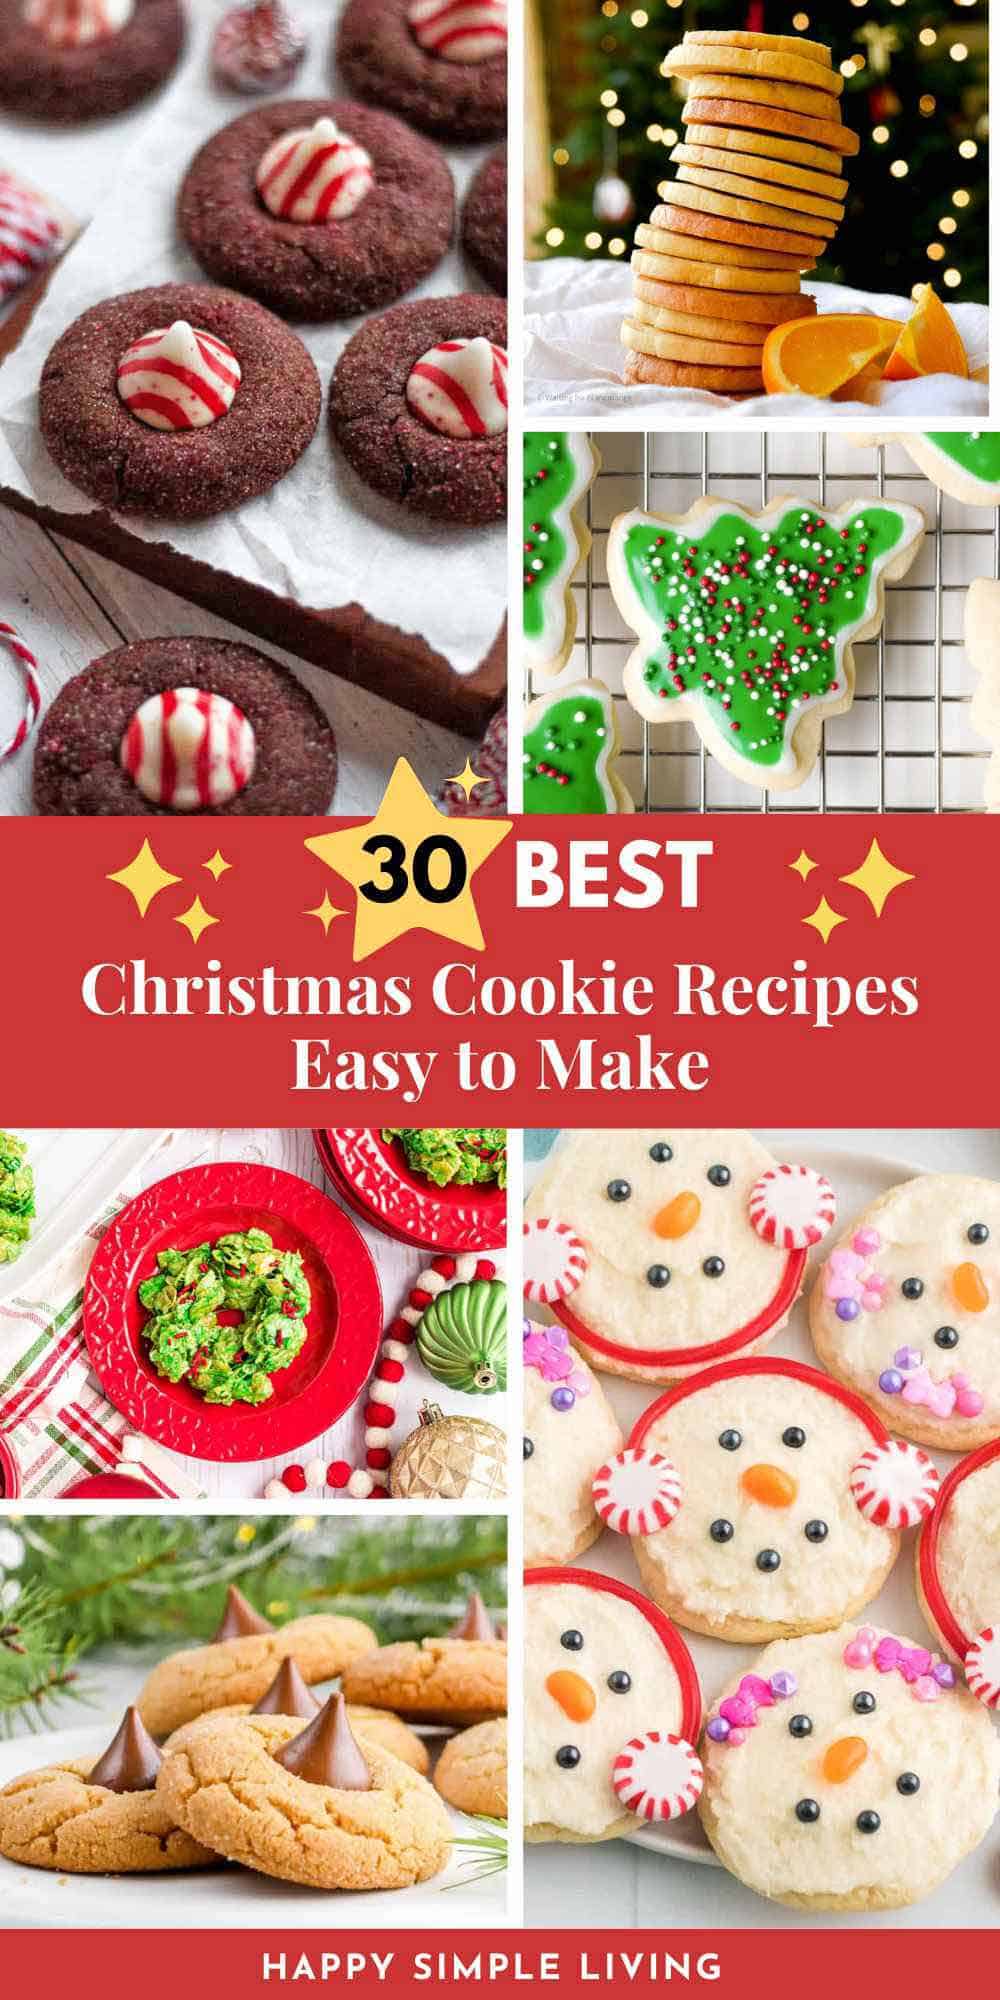 Chocolate kiss cookies, orange sugar cookies, Christmas tree cookies, wreath cookies, snowman cookies and peanut butter blossoms.